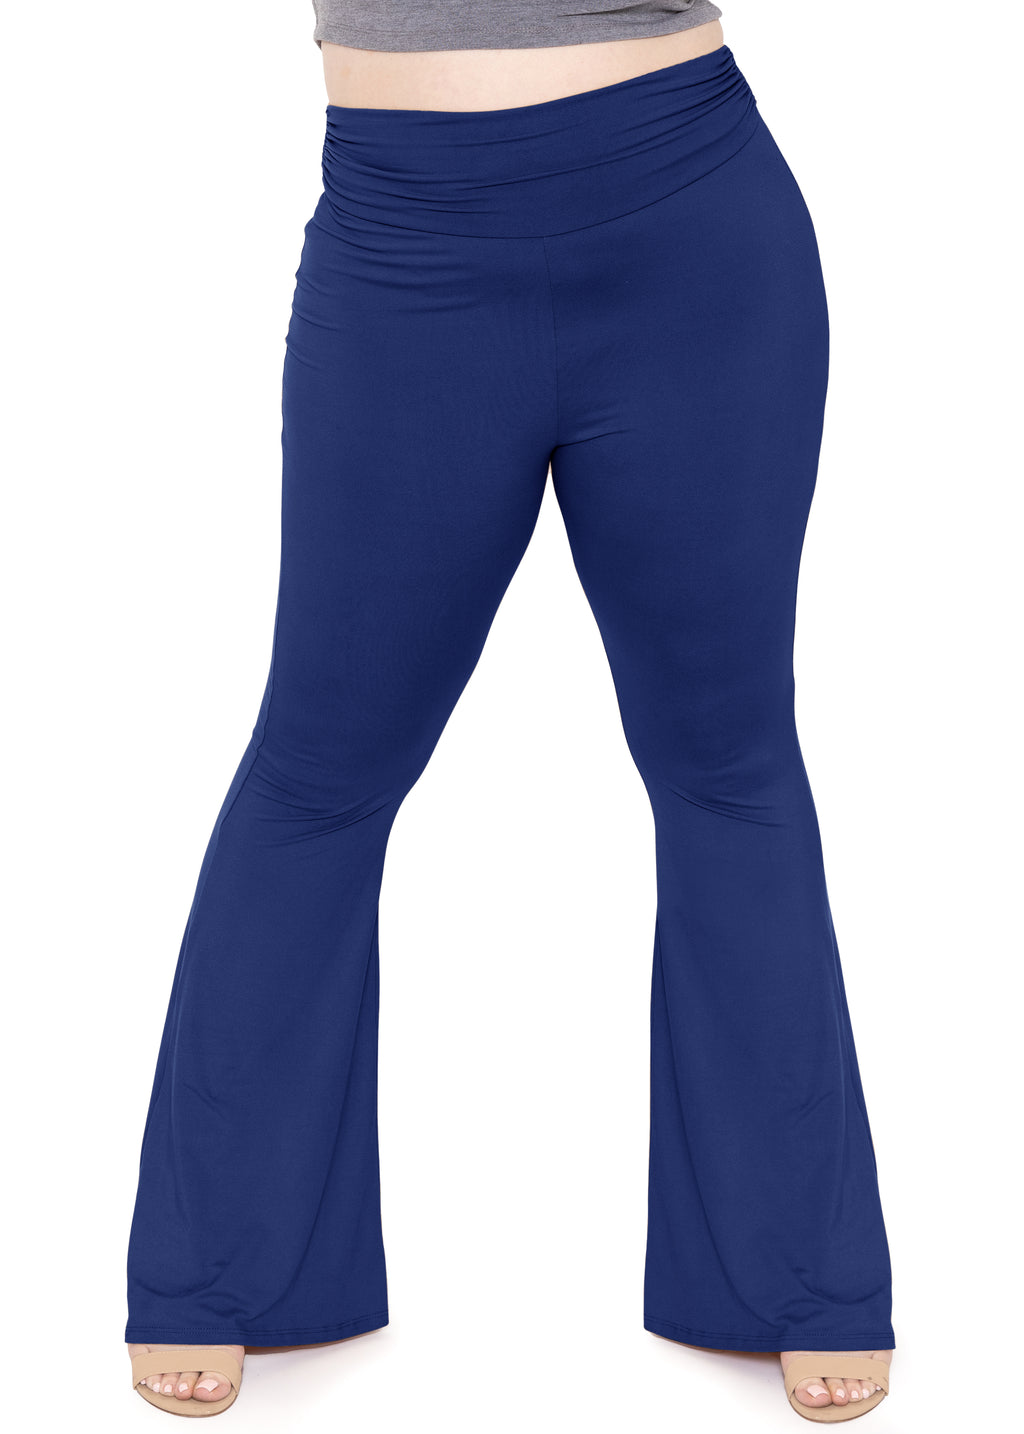 Clearance under $10 Charella Women Plus Size Solid Hollow Elastic Waist  Casual Short Leggings Pants Blue,XXL 